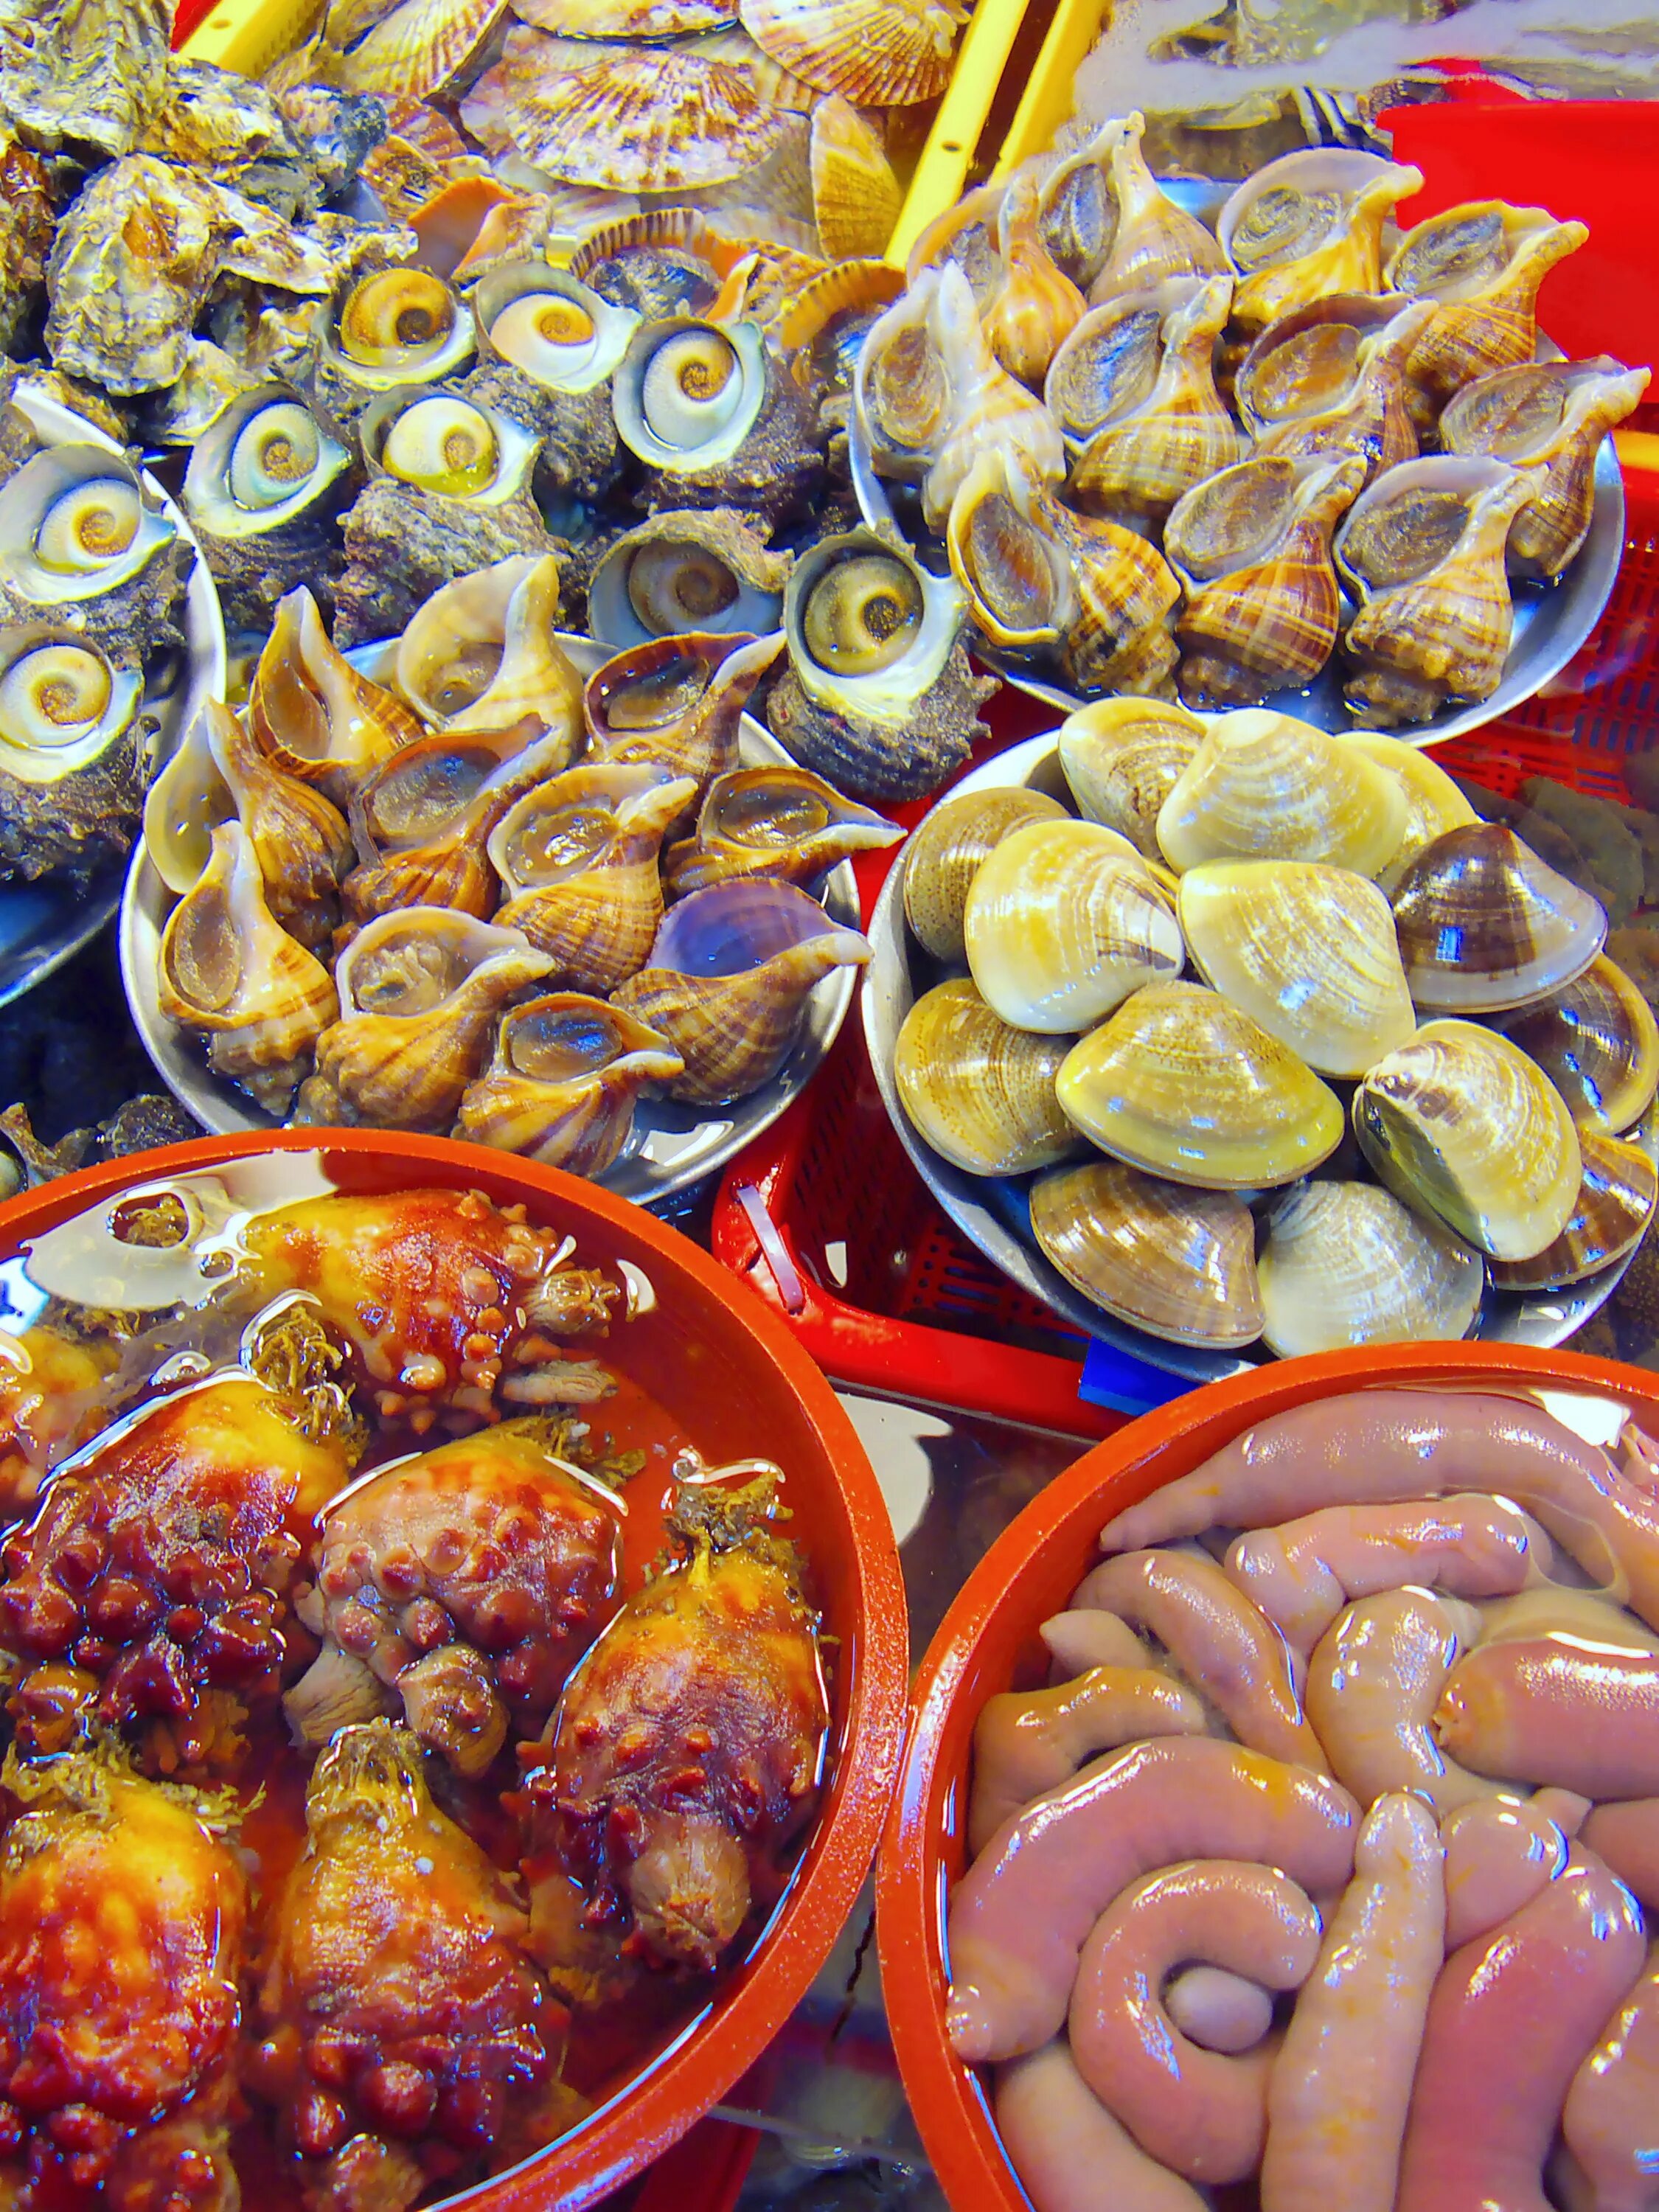 Корейские морепродукты. Корейские морские деликатесы. Корейская еда морепродукты. Корейская еда на рынке. Необычная еда.